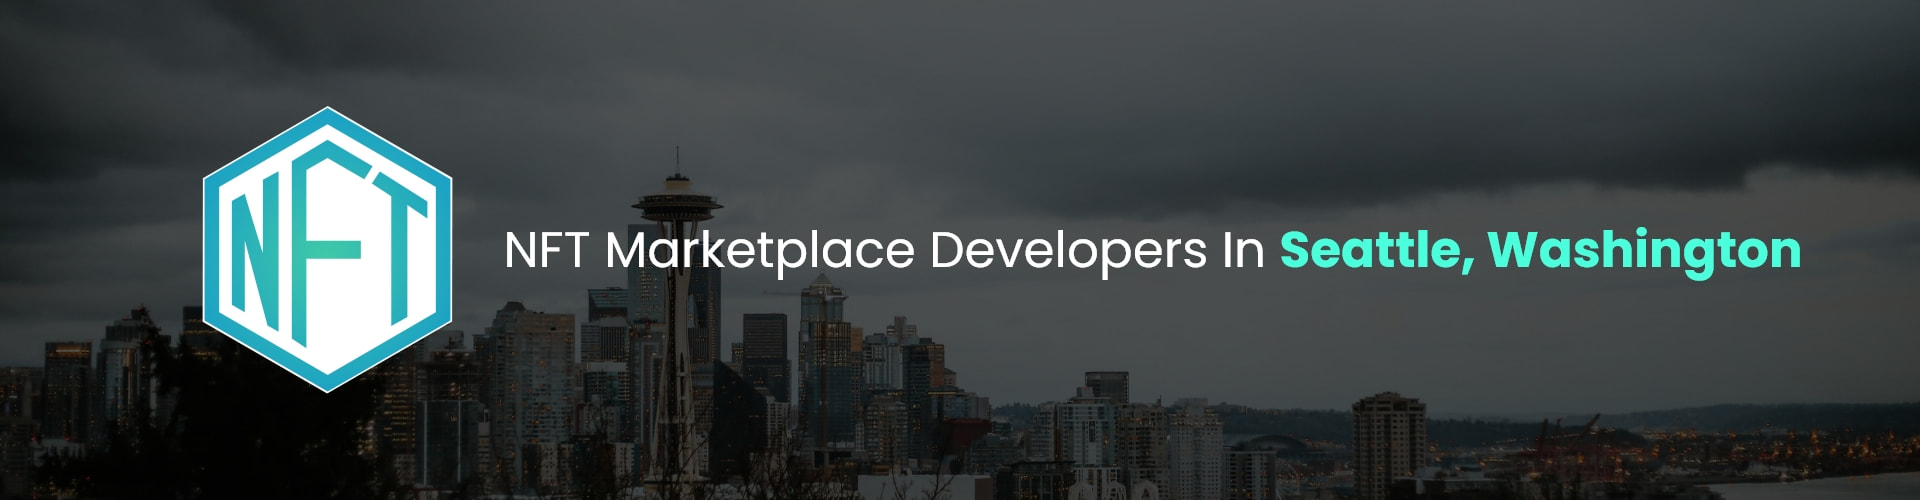 hire nft marketplace developers in seattle